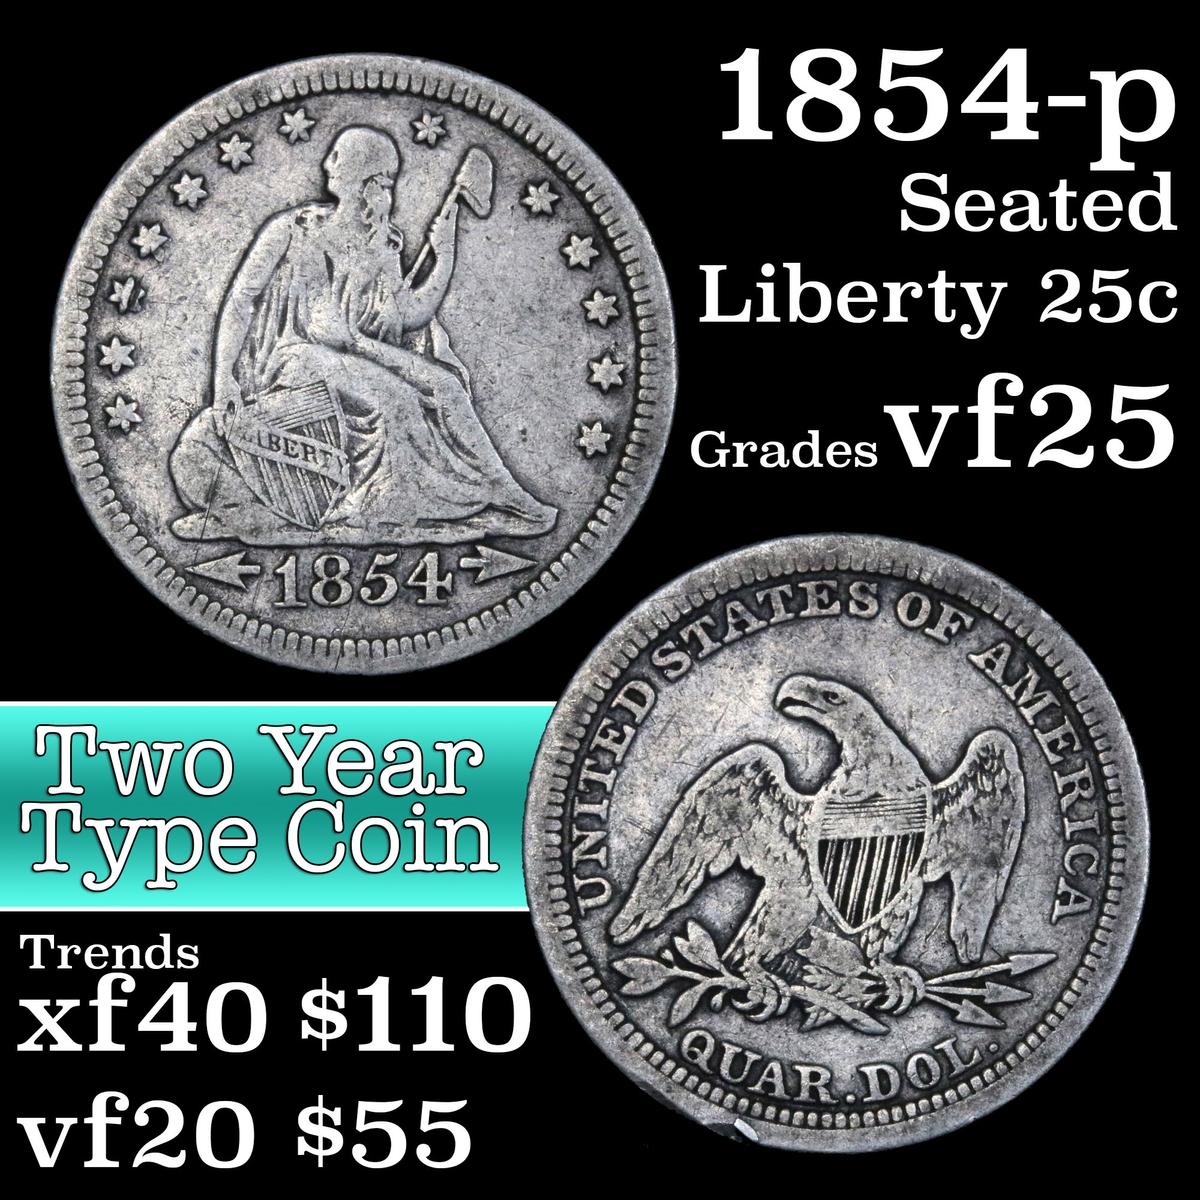 1854-p Seated Liberty Quarter 25c Grades vf+